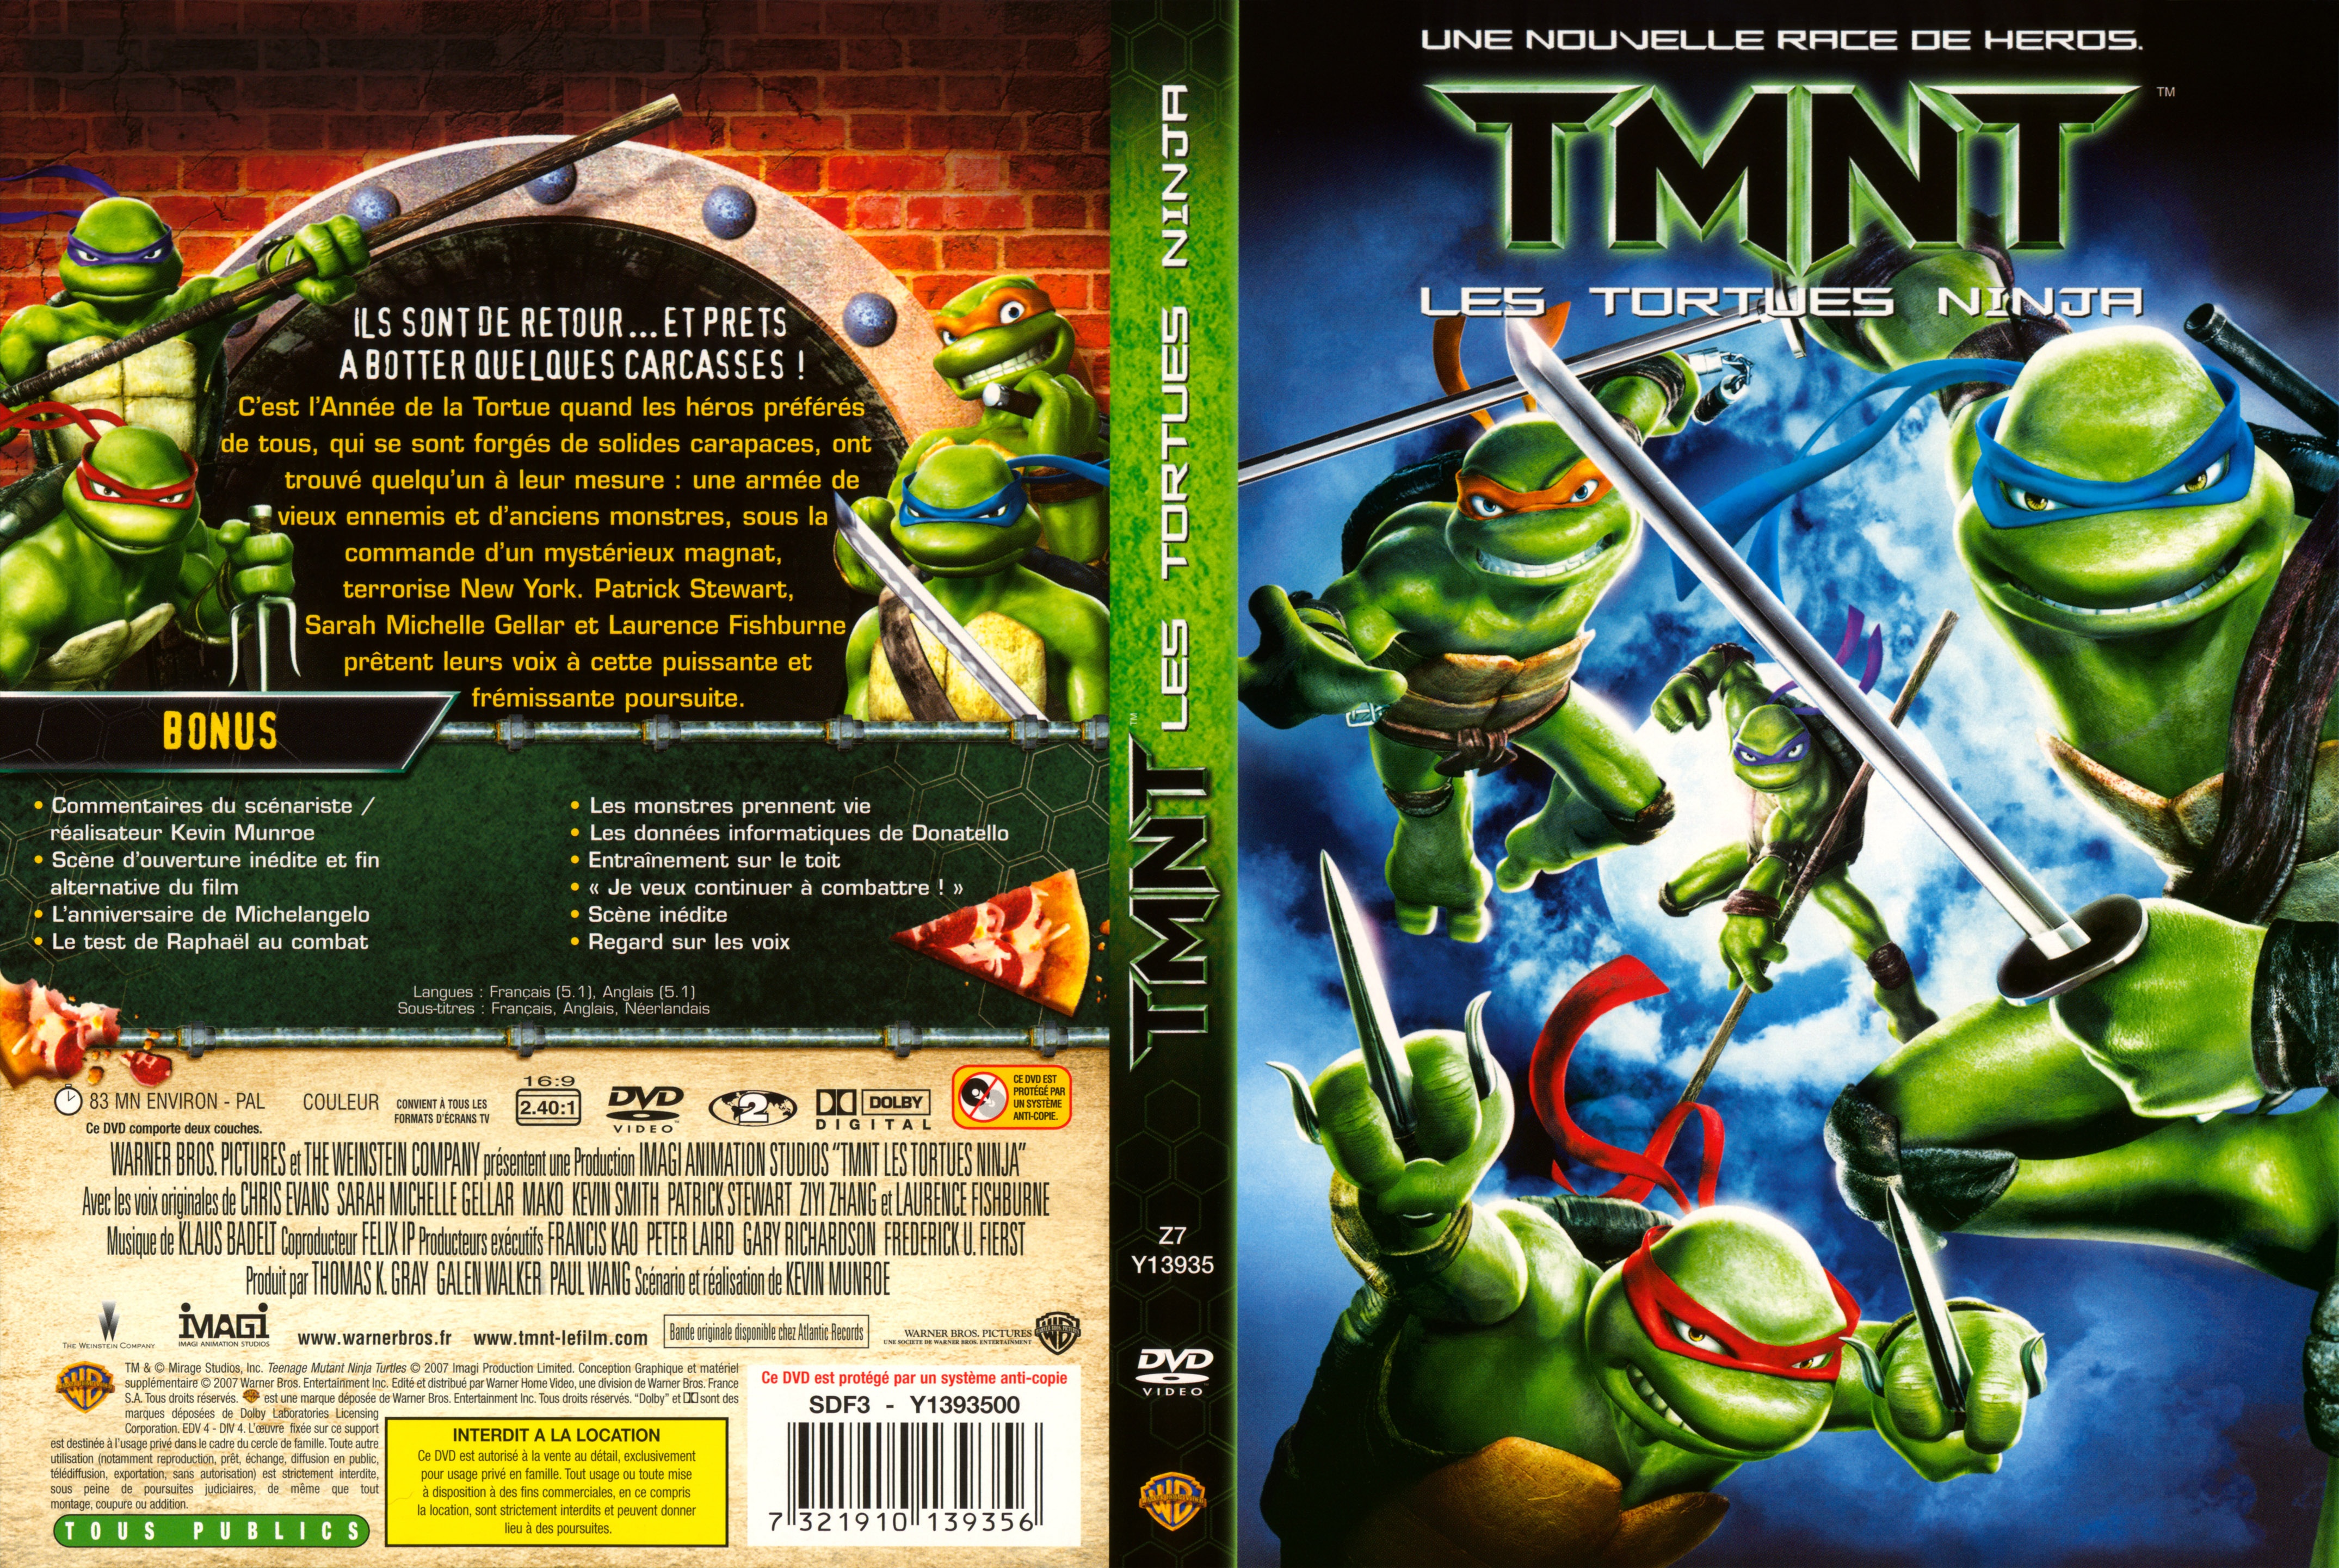 Jaquette DVD TMNT les tortues ninja